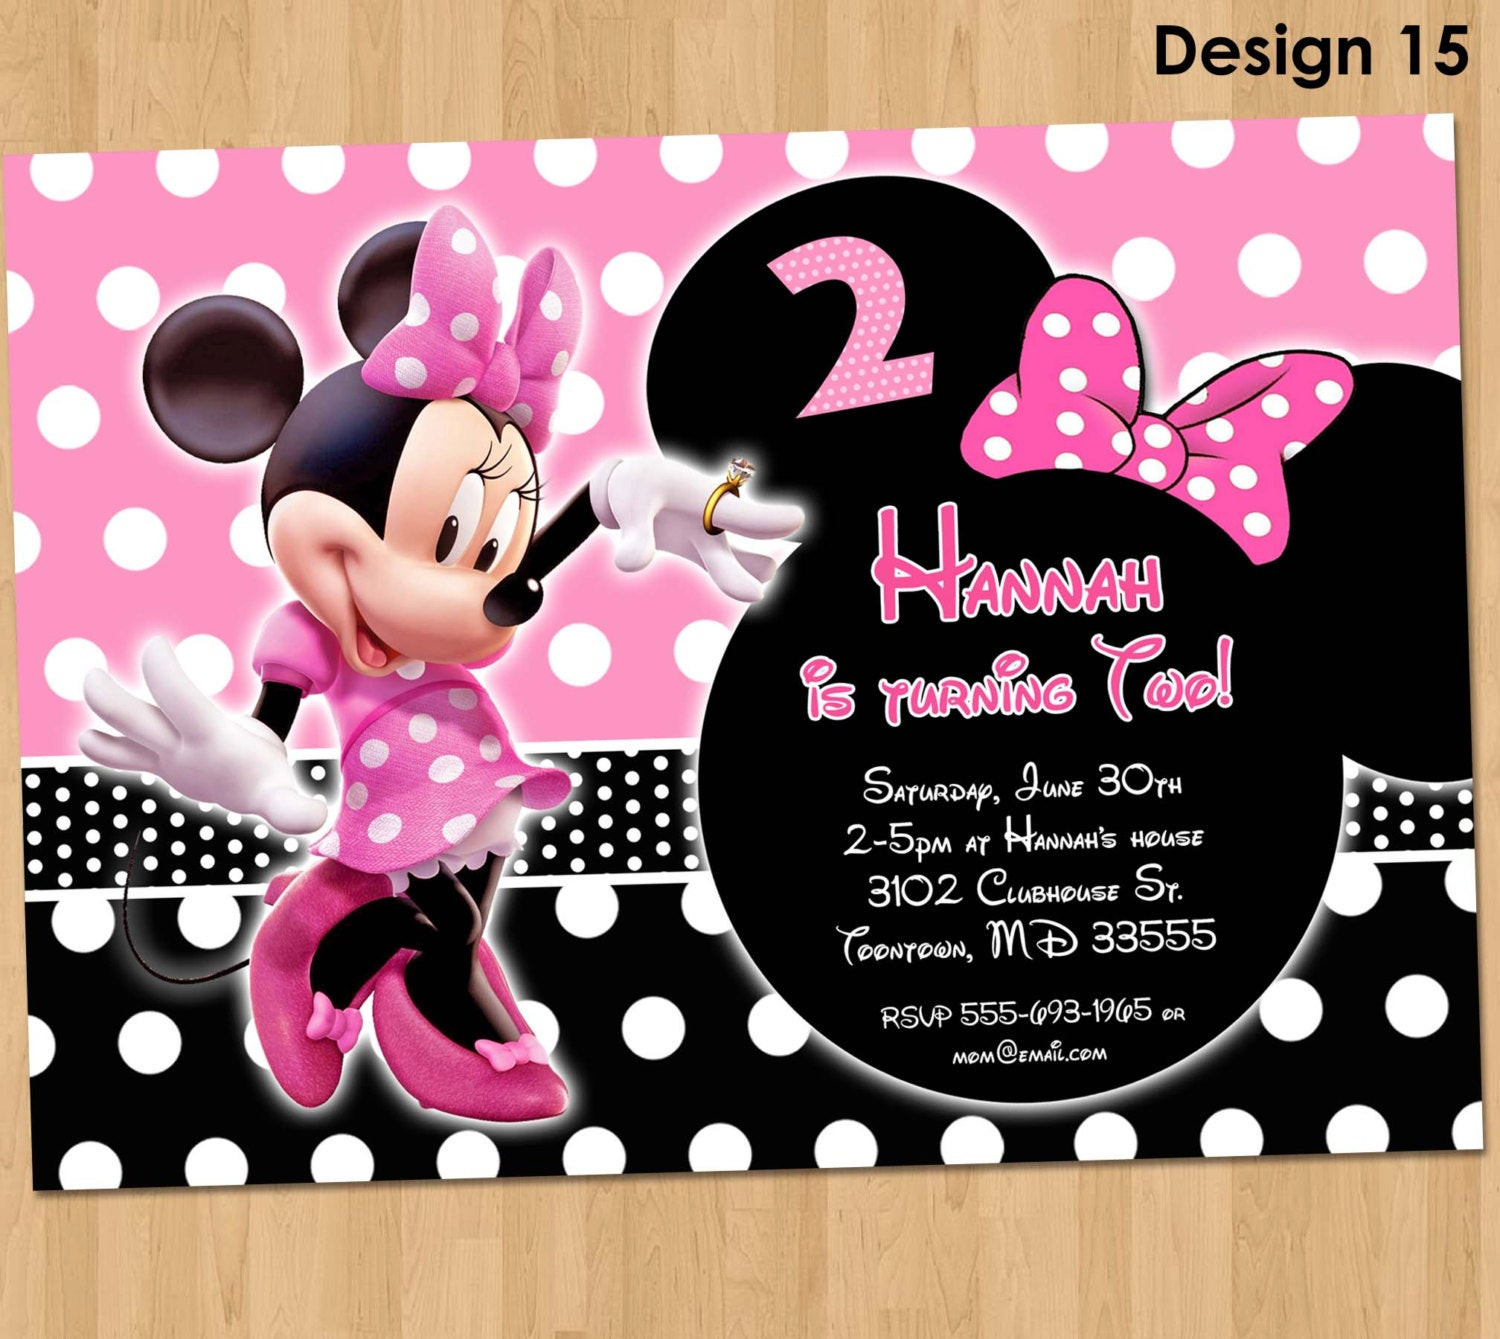 Minnie Mouse Birthday Party Invitations
 Minnie Mouse Invitation Minnie Mouse Birthday Invitation